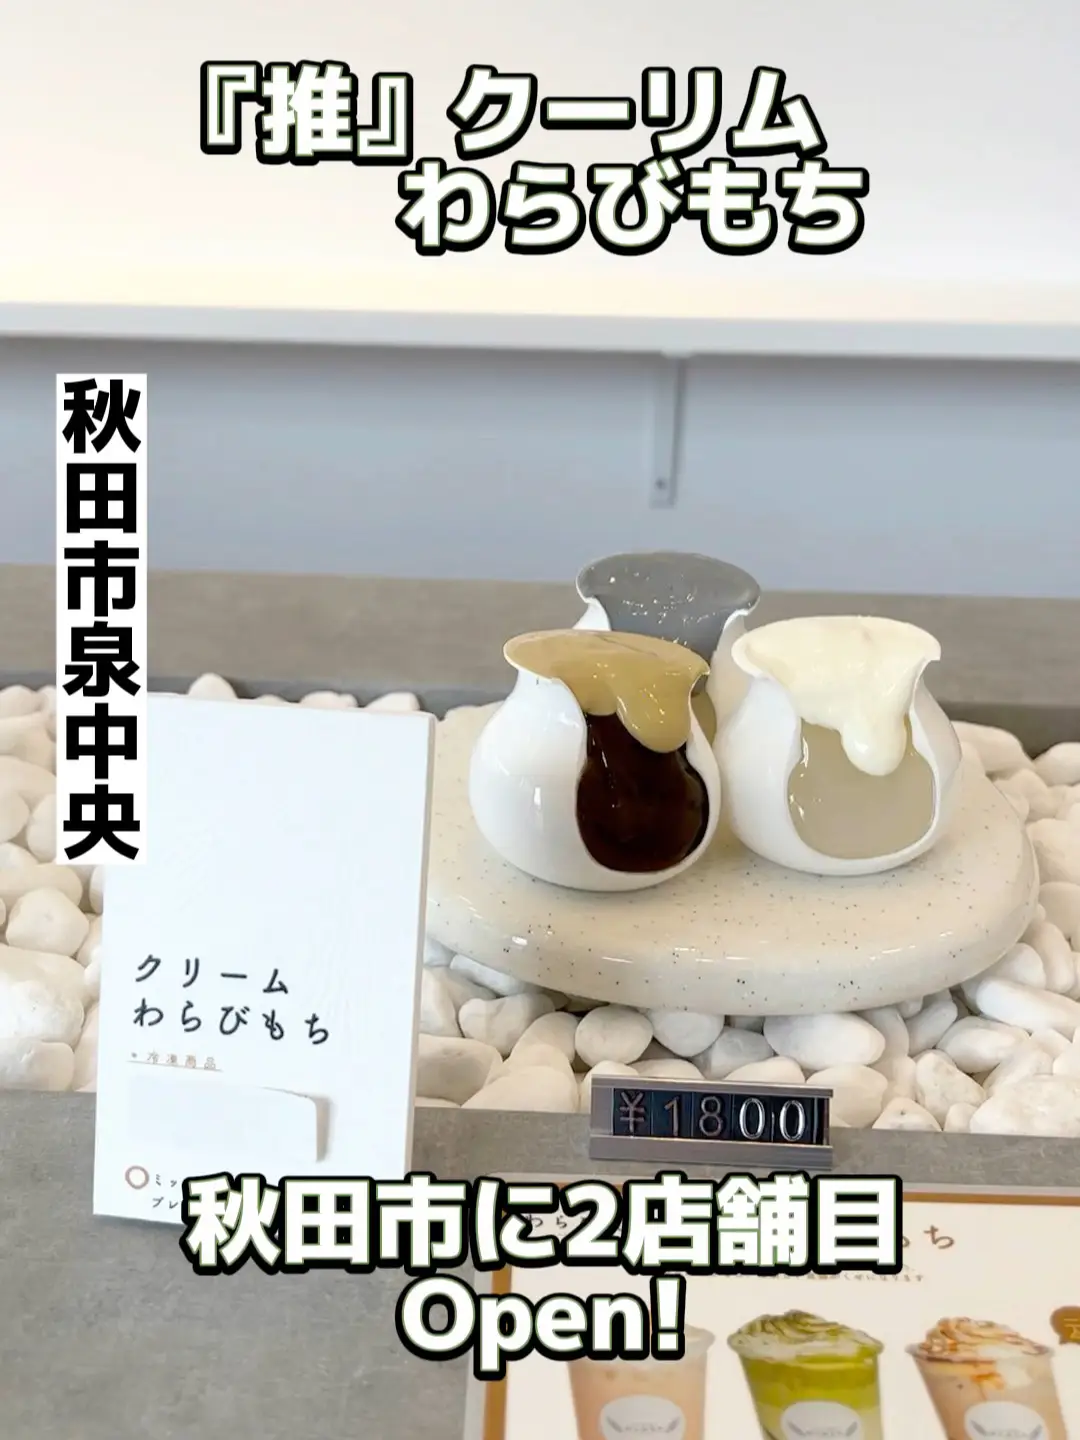 Warabimochi specialty store open in Akita city! 】 | Video